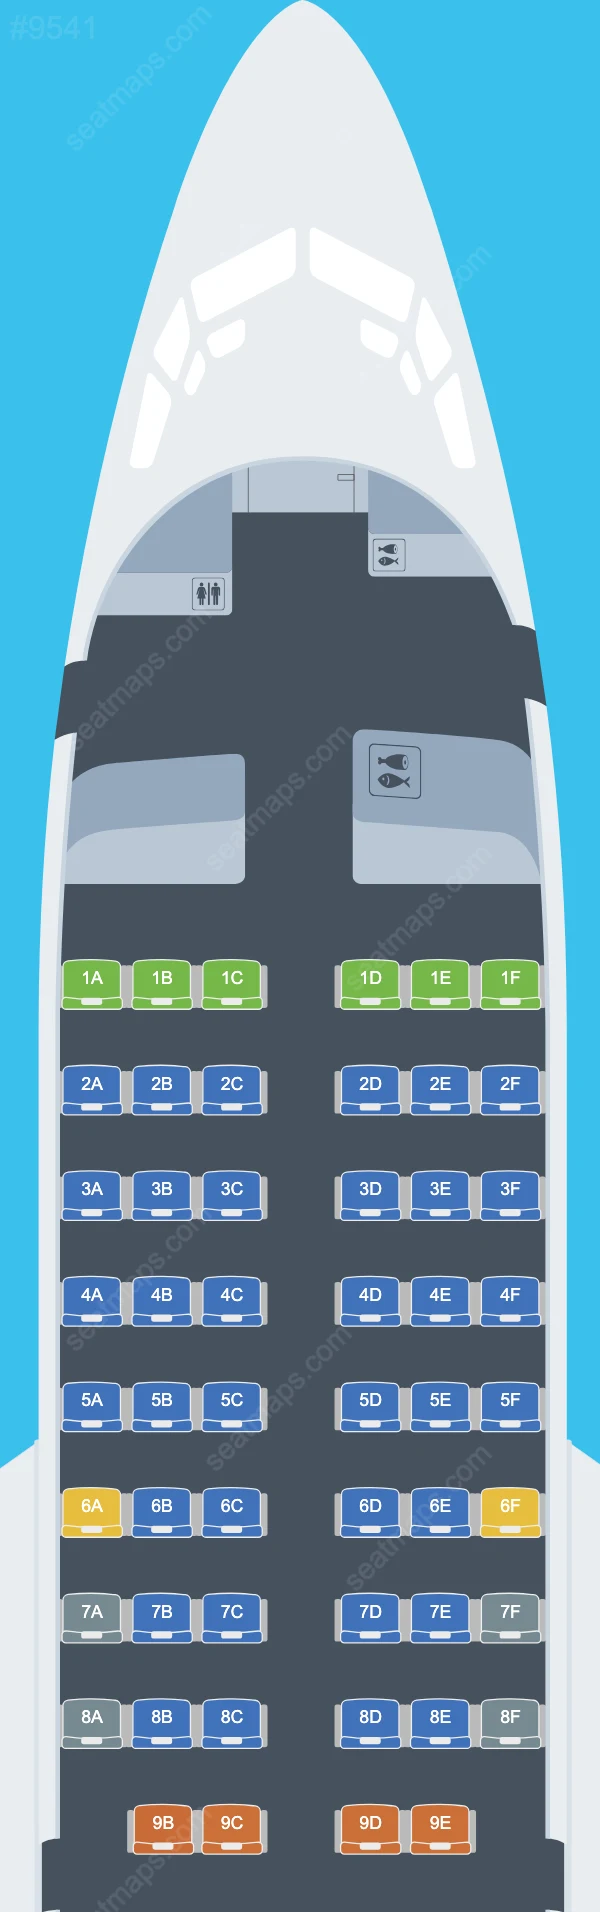 Varesh Airlines Boeing 737 Seat Maps 737-500 V.2